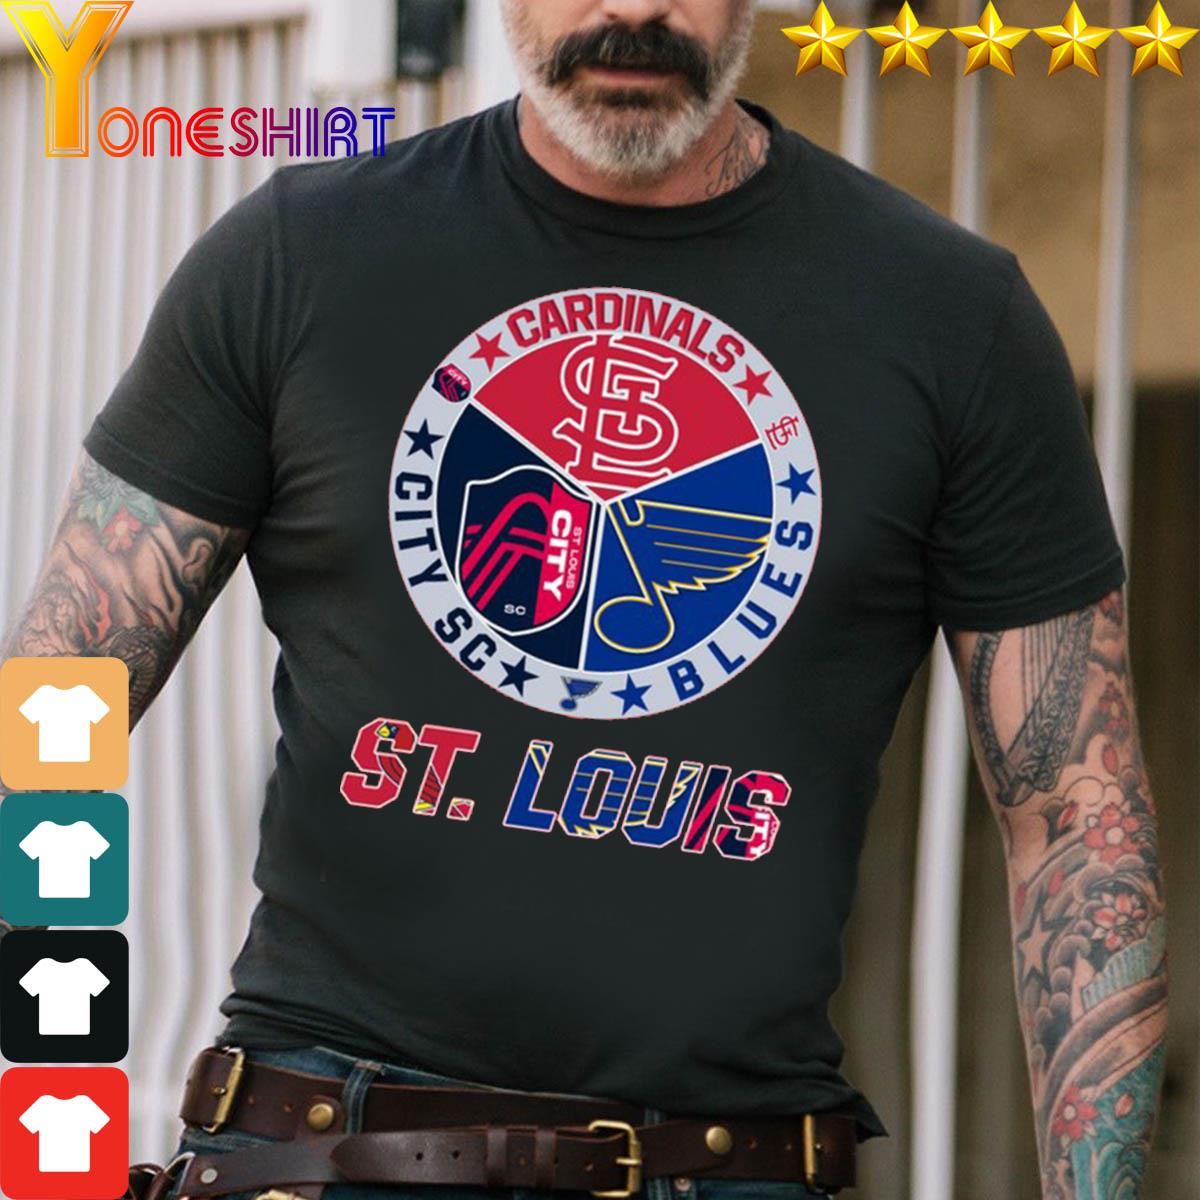 St. Louis Cardinals Fanatics Branded Iconic Vintage Ticket Graphic T-Shirt  - Black - Mens